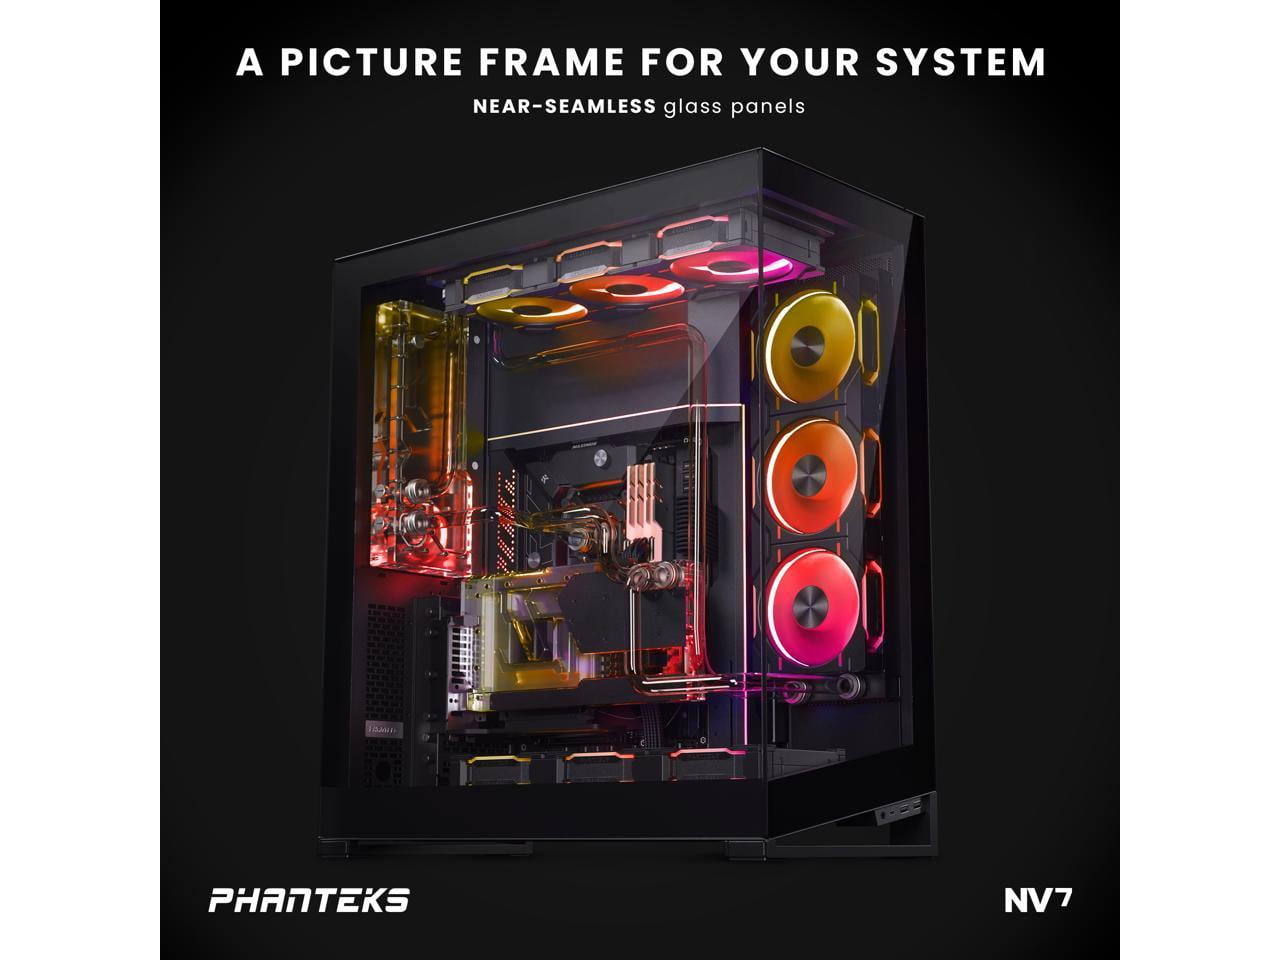 Phanteks on Instagram: The NV7 offers a near-seamless view of the inside. # phanteks #nv7 #d30 #pcbuilds #pcsetups #gamingsetups